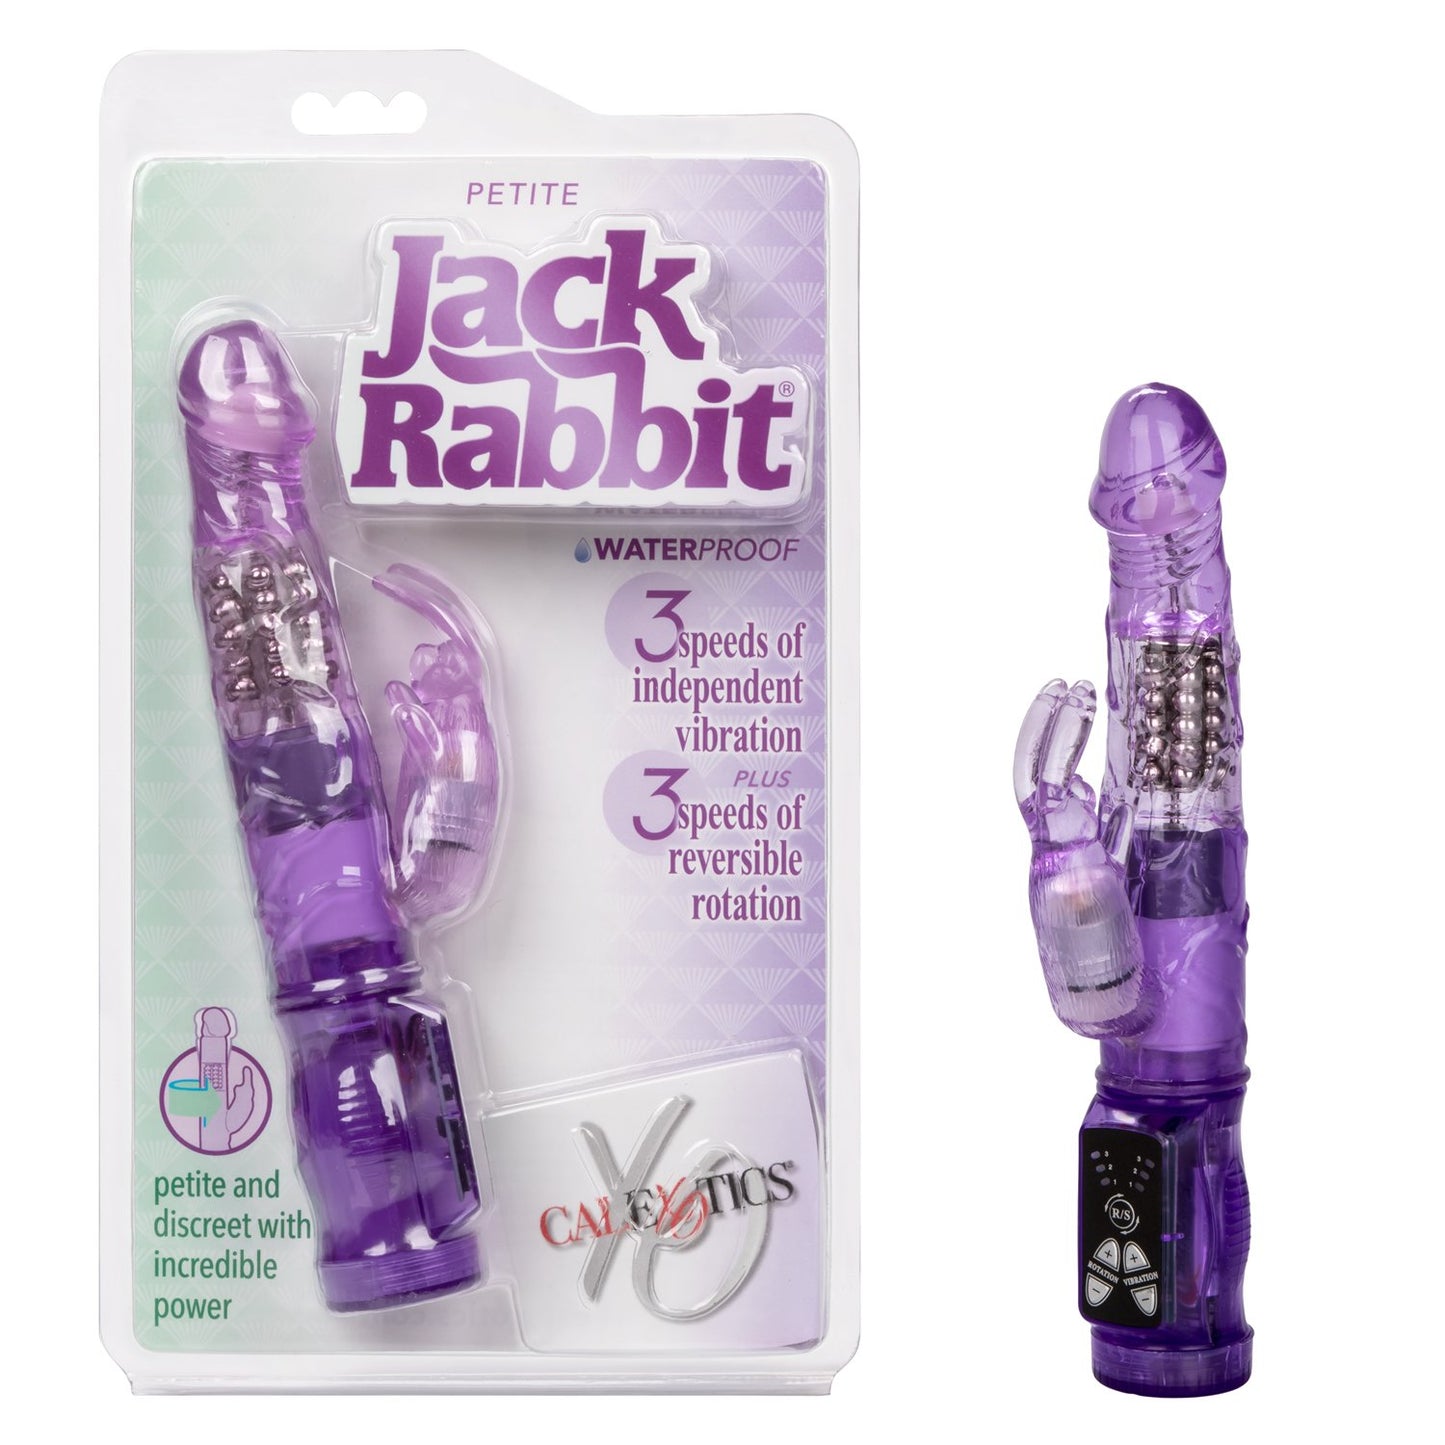 Jack Rabbit Petite Jack Rabbit